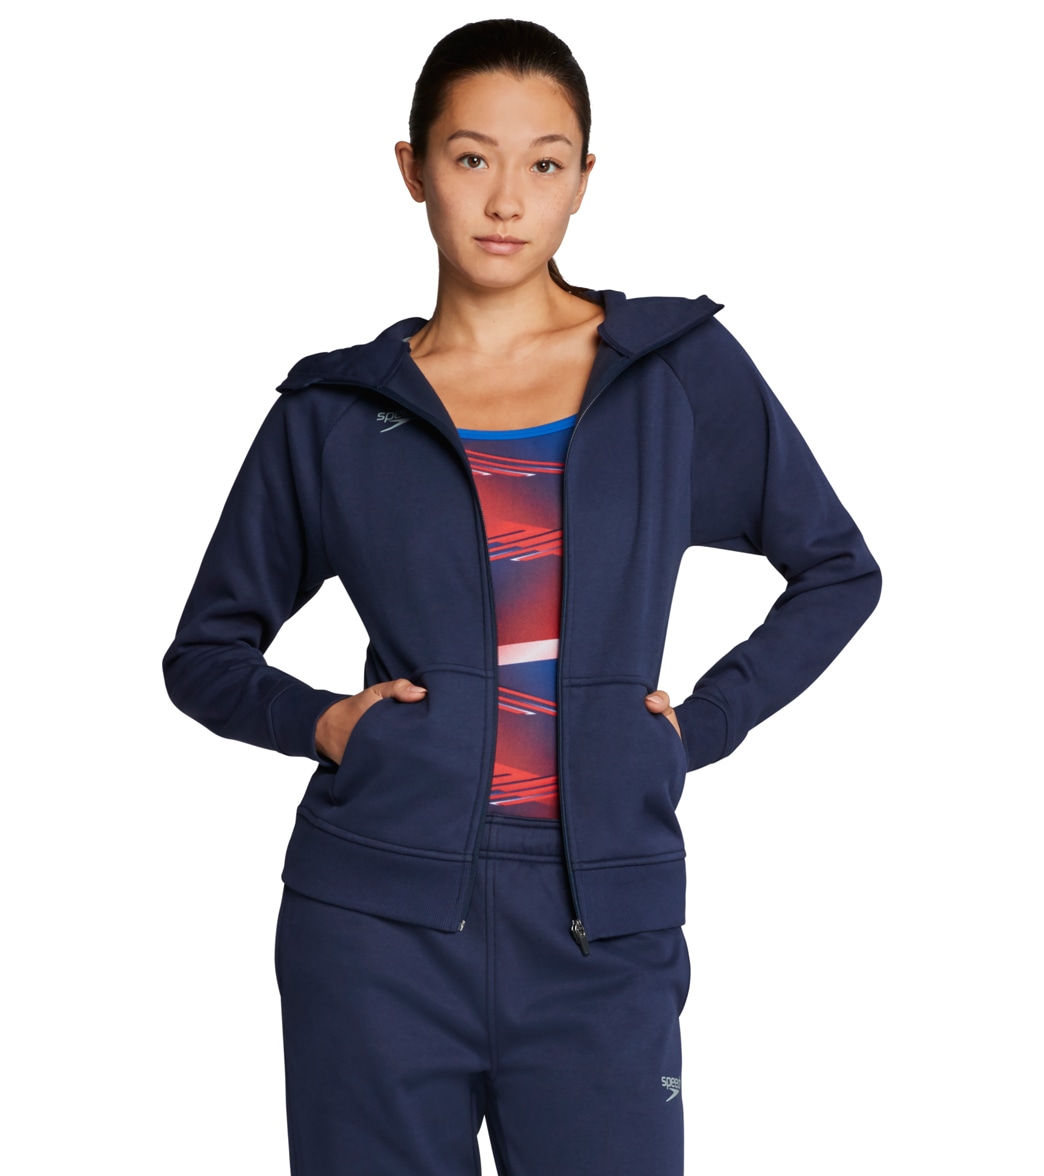 Speedo Women's Team Jacket - Navy Large Size Large Cotton/Polyester - Swimoutlet.com